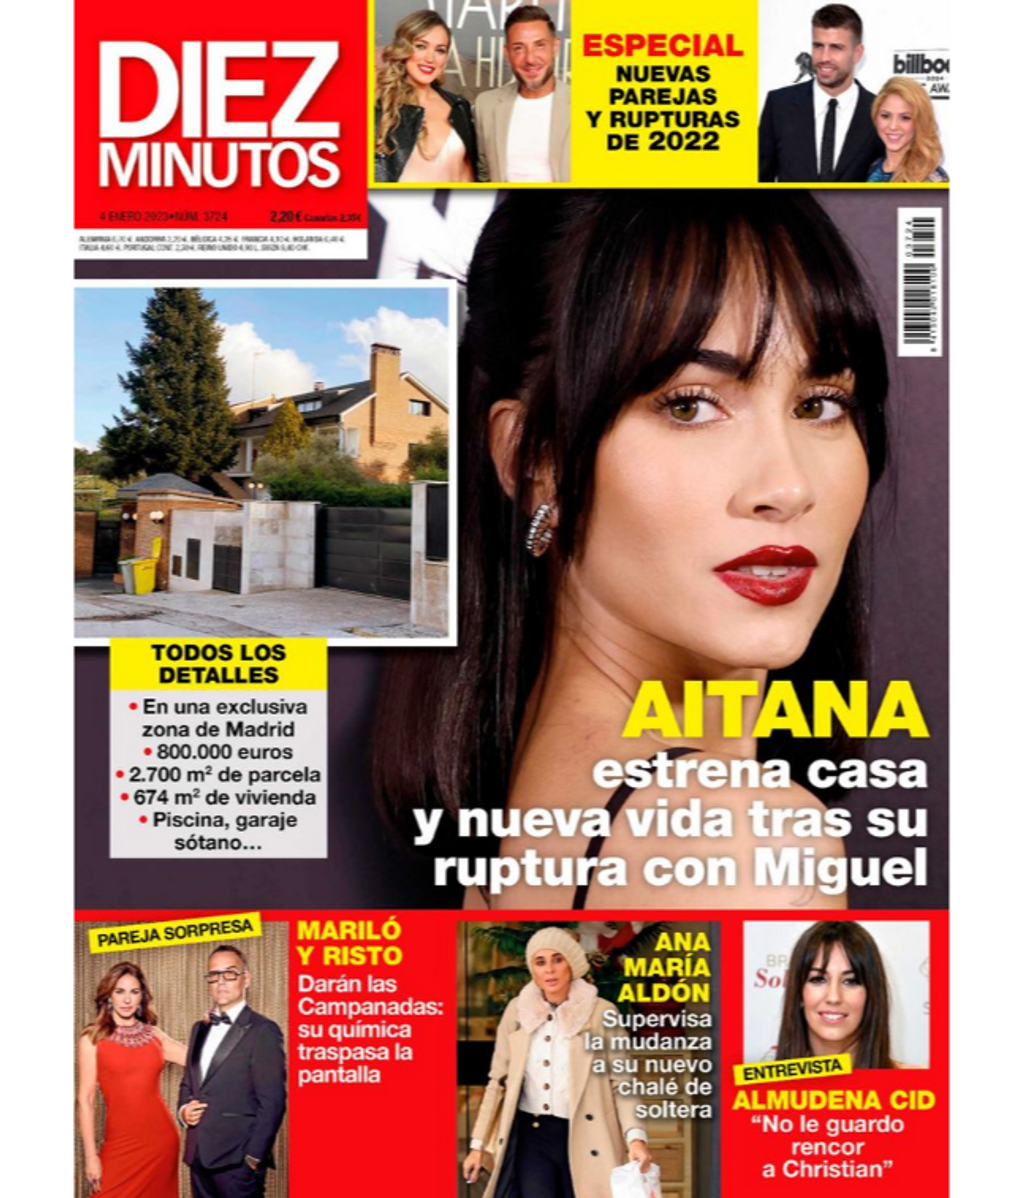 La portada de 'Diez Minutos' mostrando la casa de Aitana